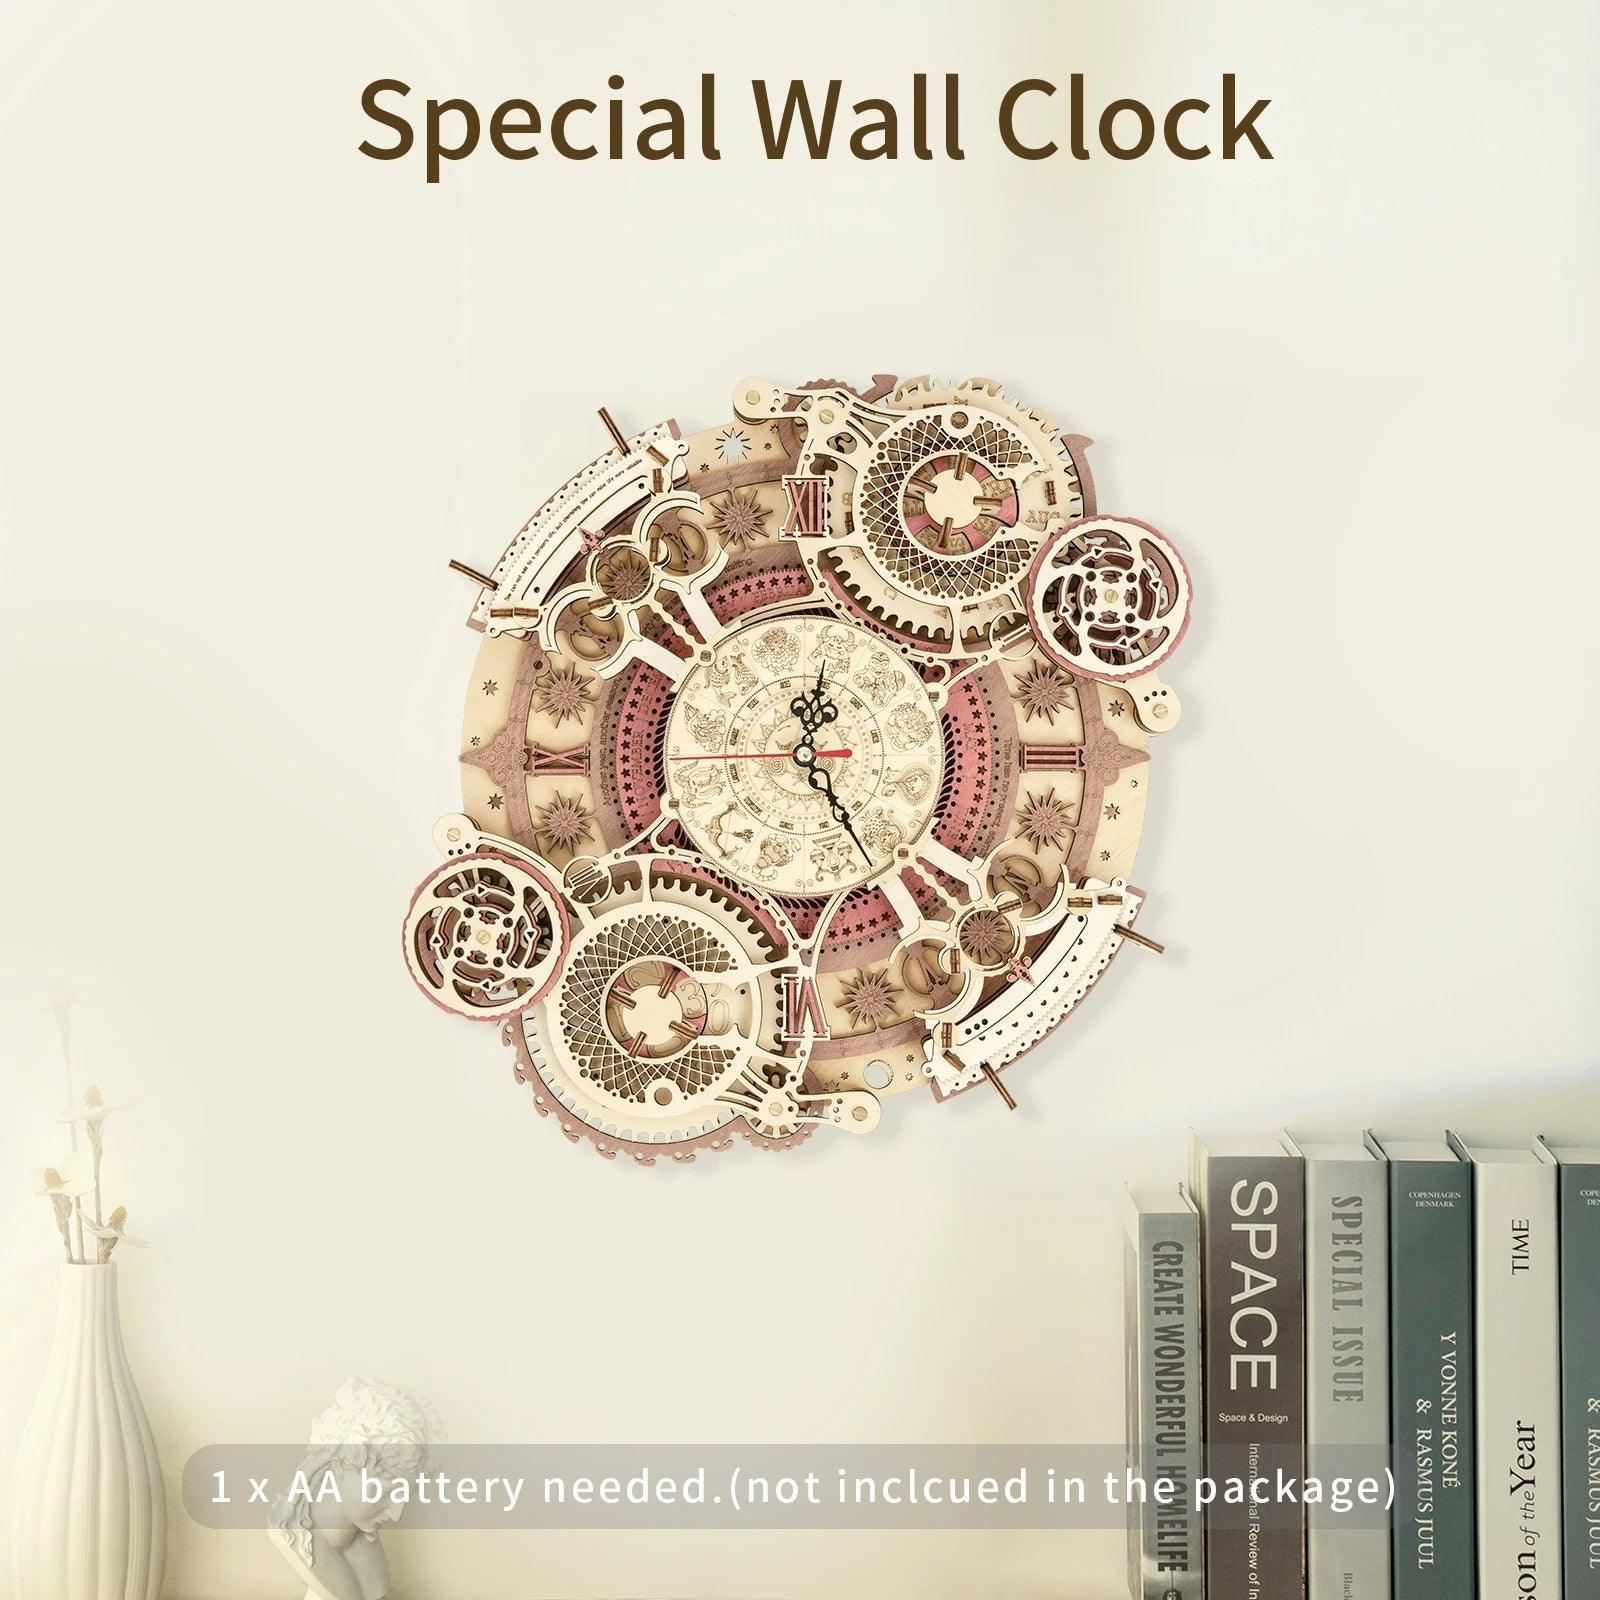 Robotime ROKR Zodiac Wall Clock 3D Wooden Puzzle - Silvis21 ™